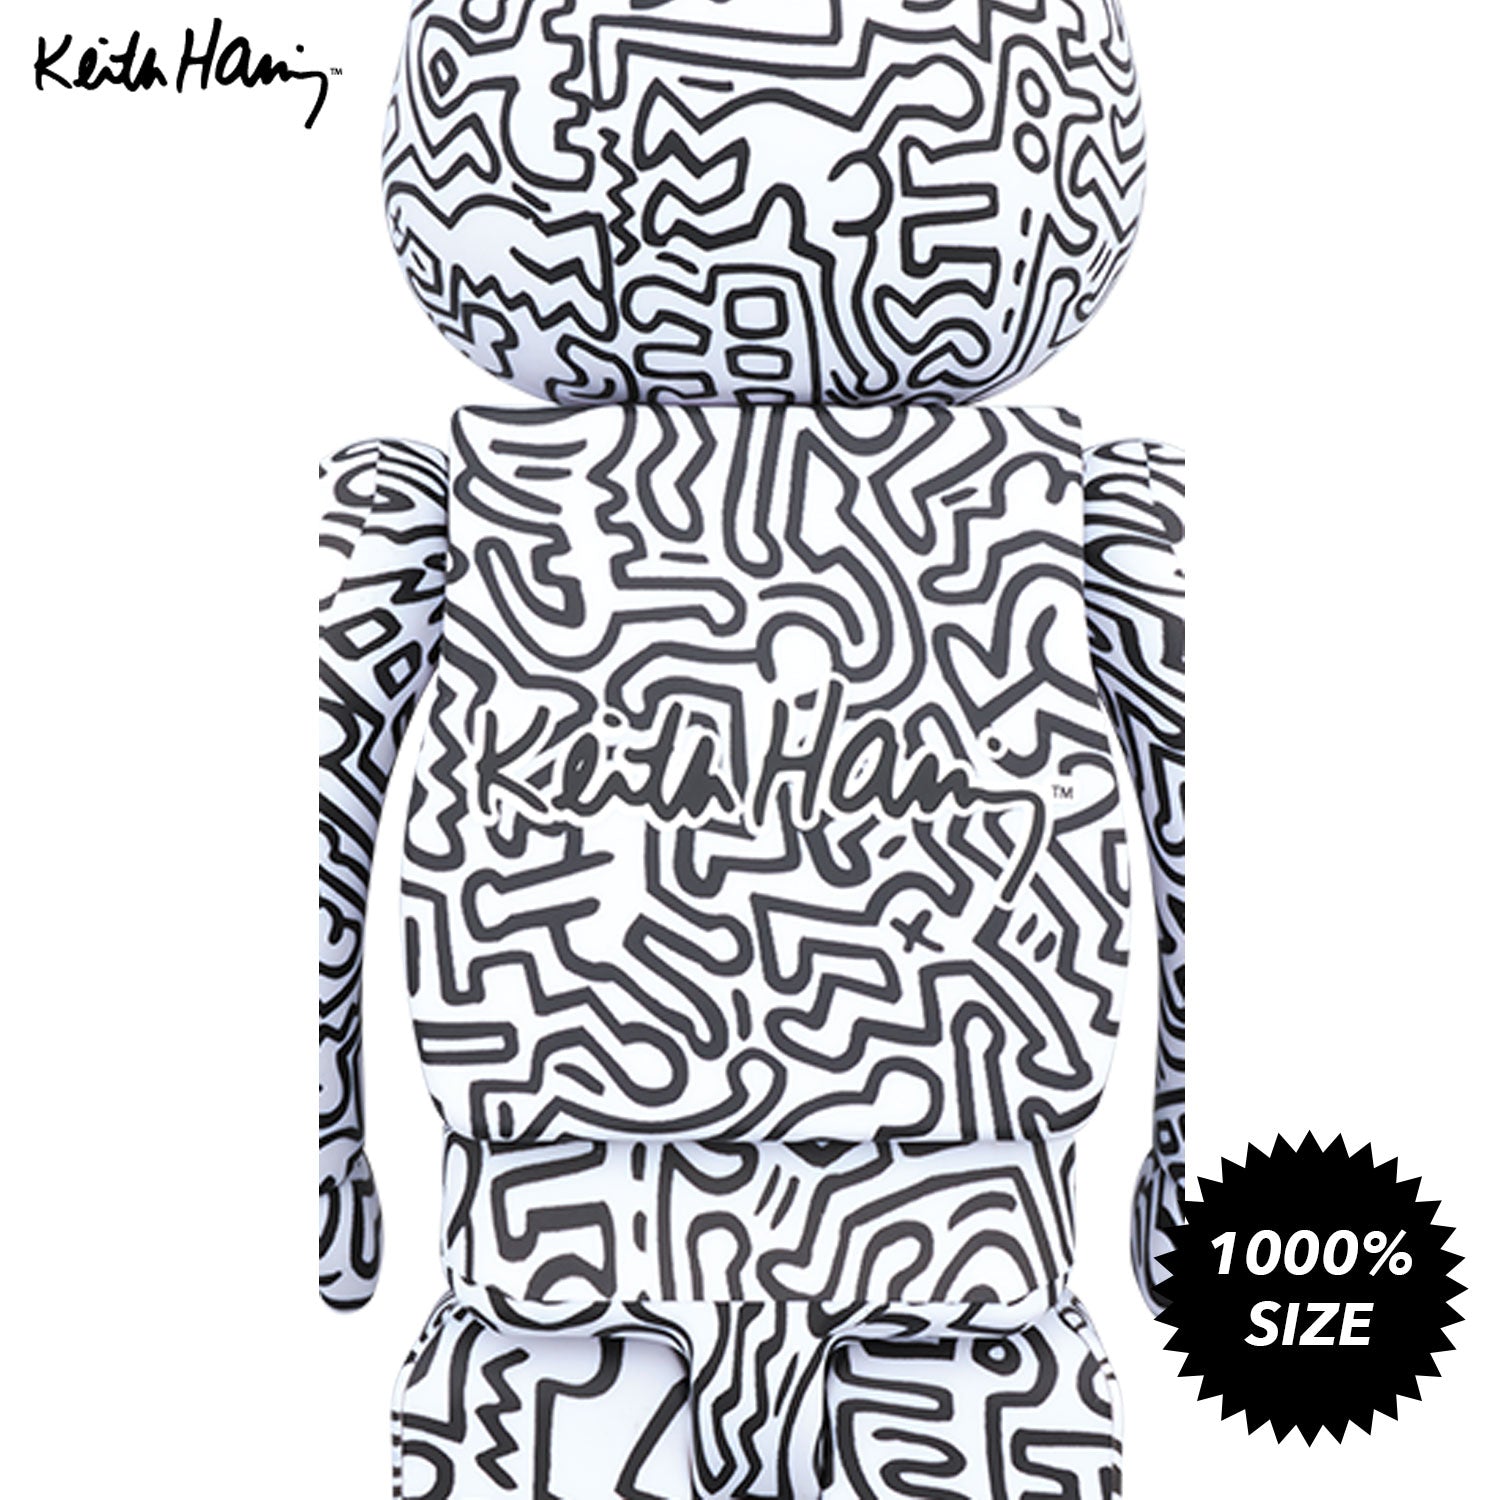 Keith Haring #4 1000% Bearbrick by Medicom Toy